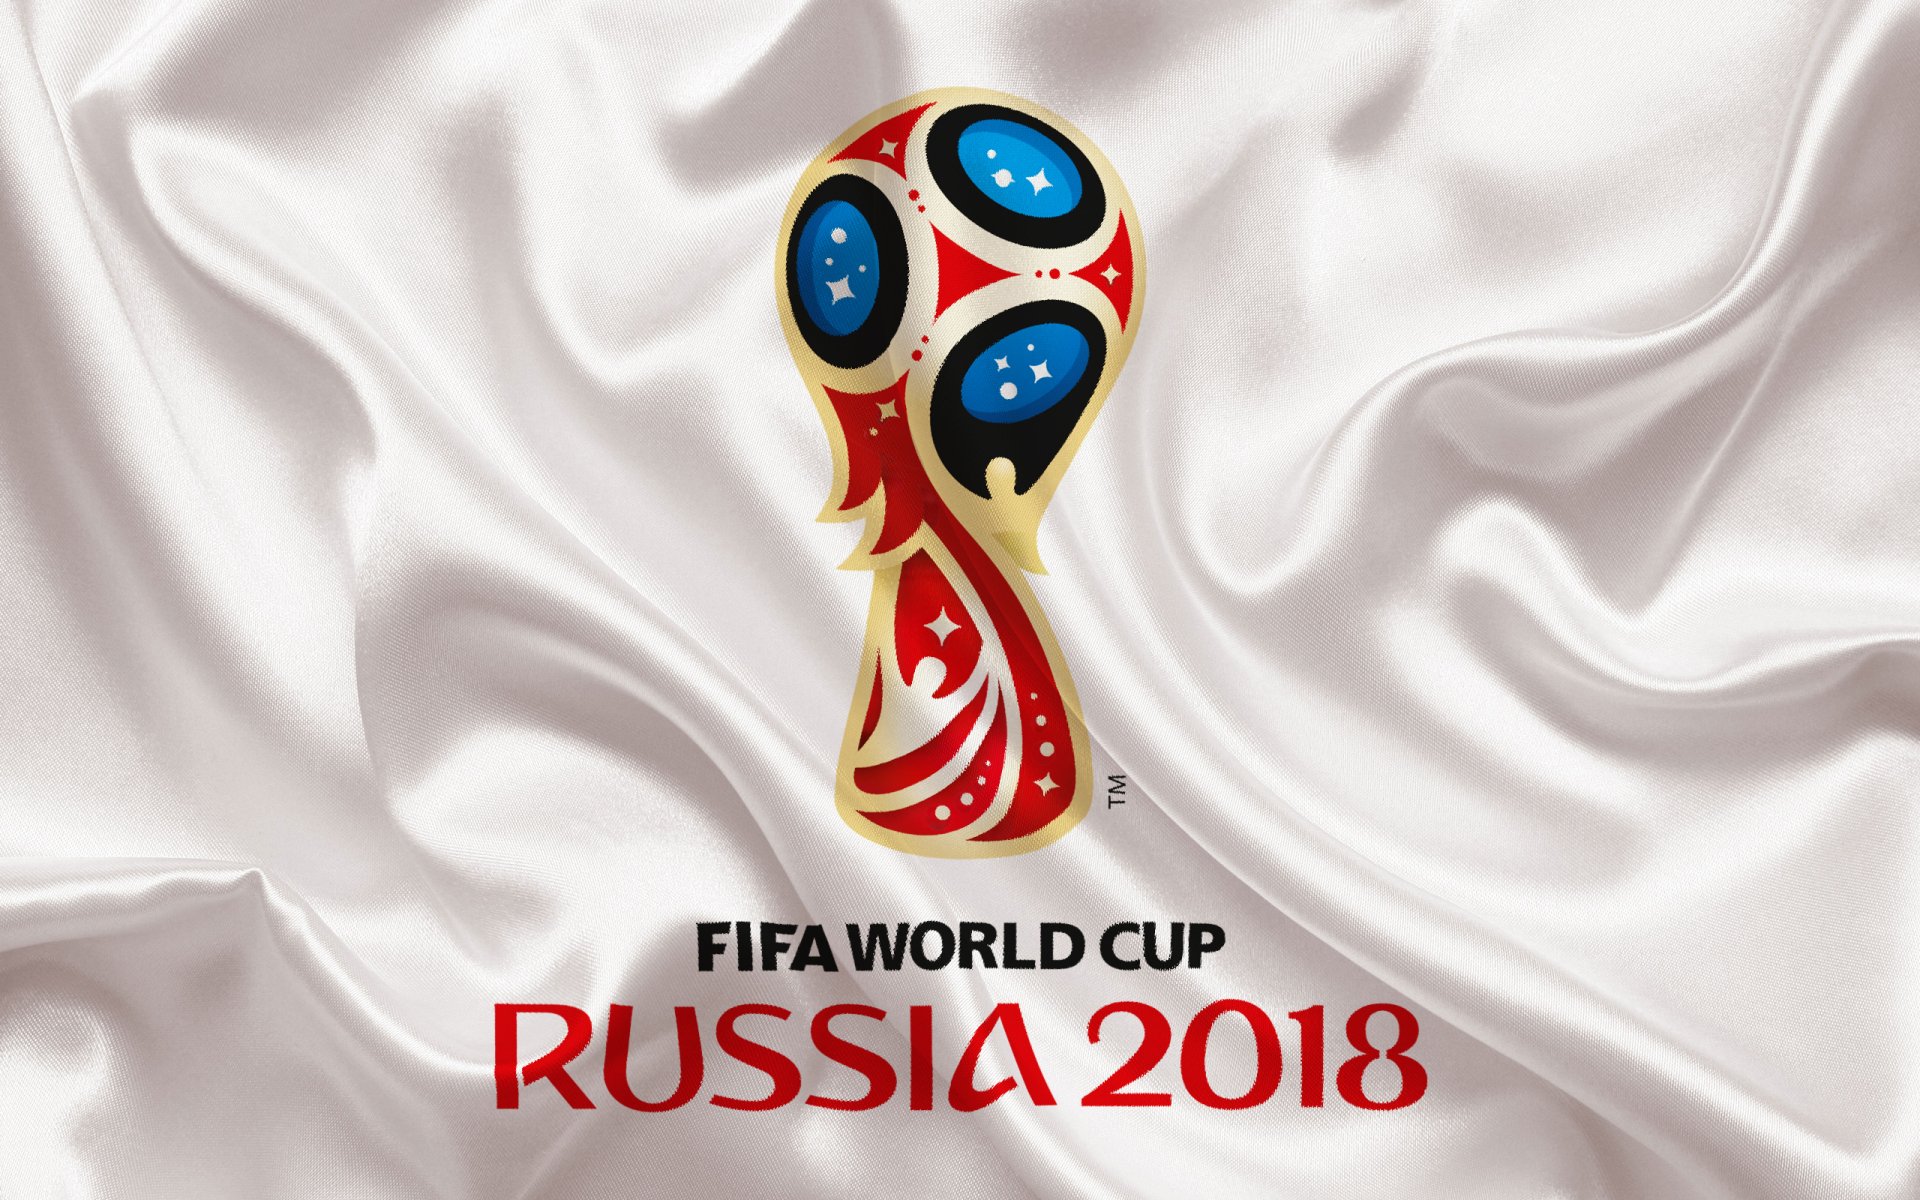 Fifa World Cup 2018 Logo Hd Wallpaper Hintergrund 2560x1600 Id 927120 Wallpaper Abyss